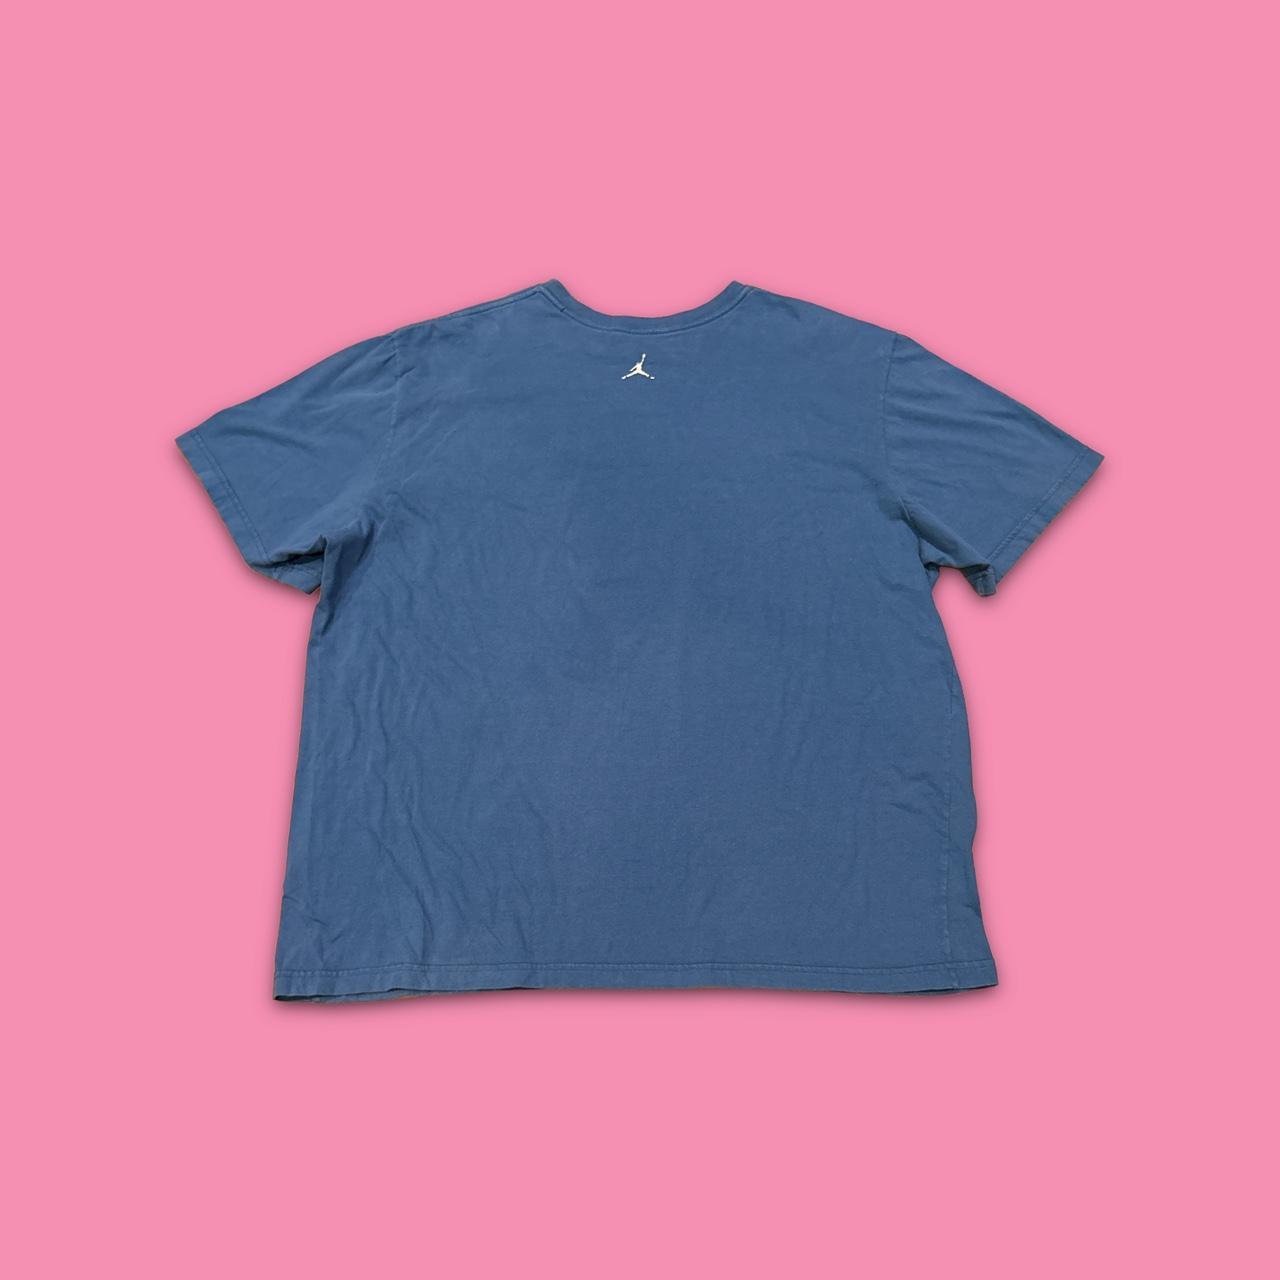 Jordan Men's Blue and Grey T-shirt | Depop